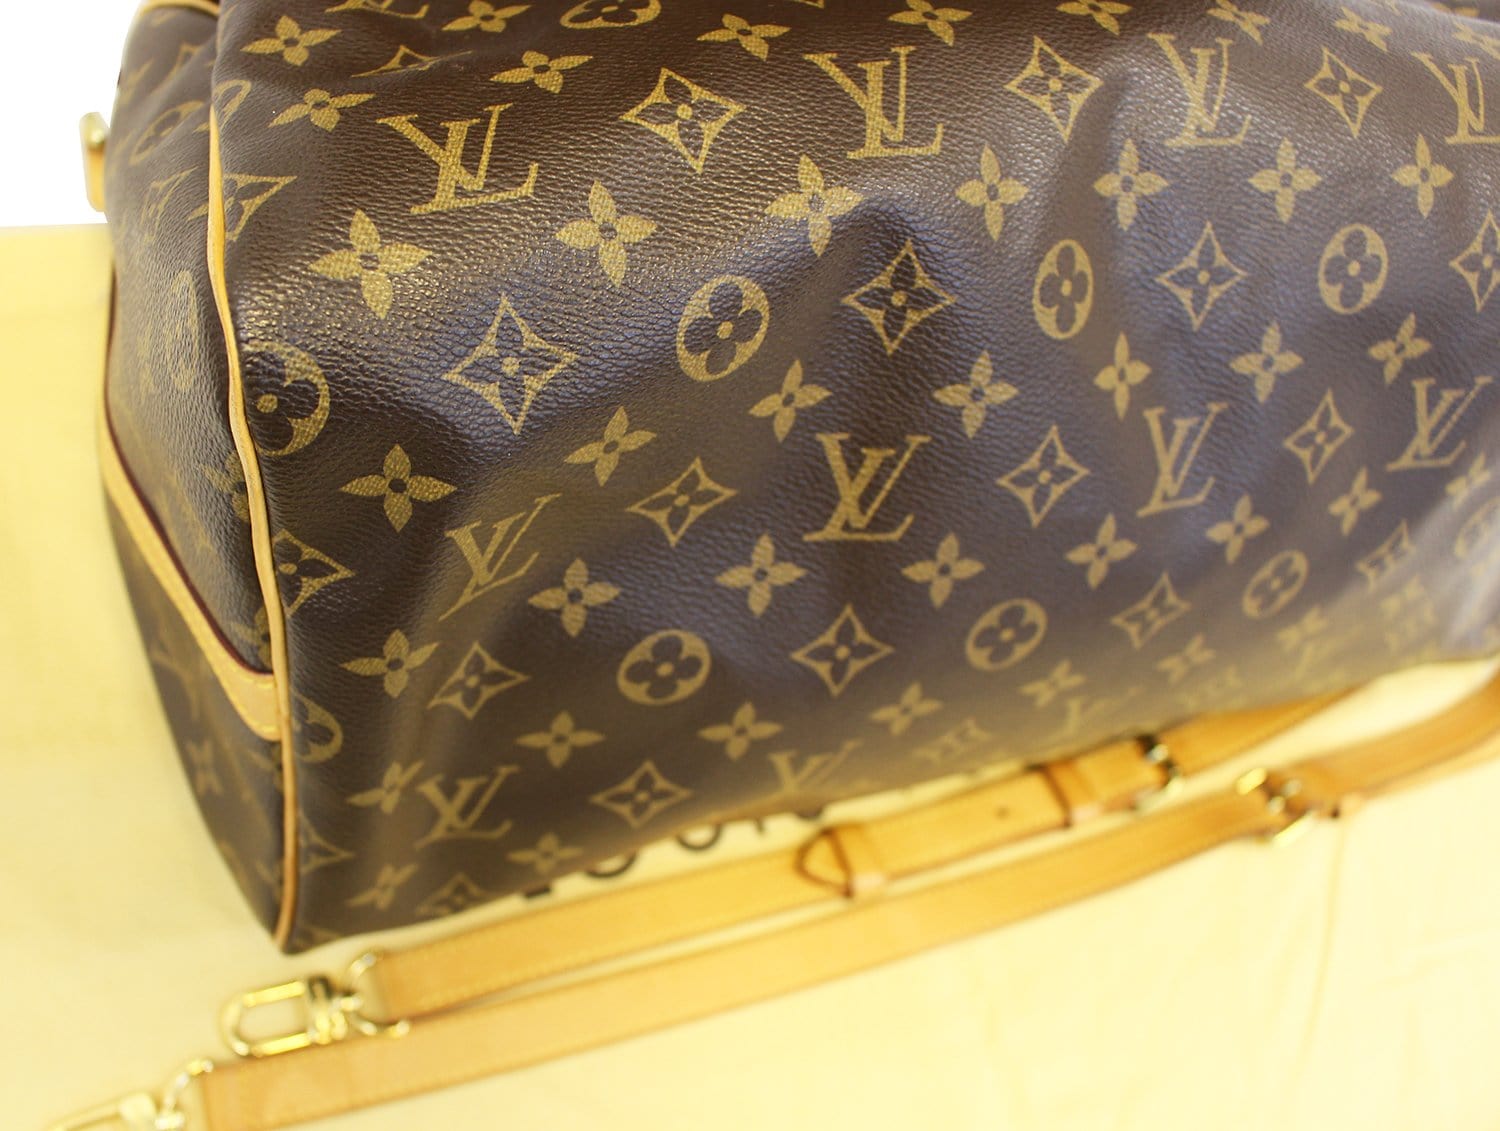 Louis Vuitton Speedy 40 Brown Canvas Handbag (Pre-Owned)